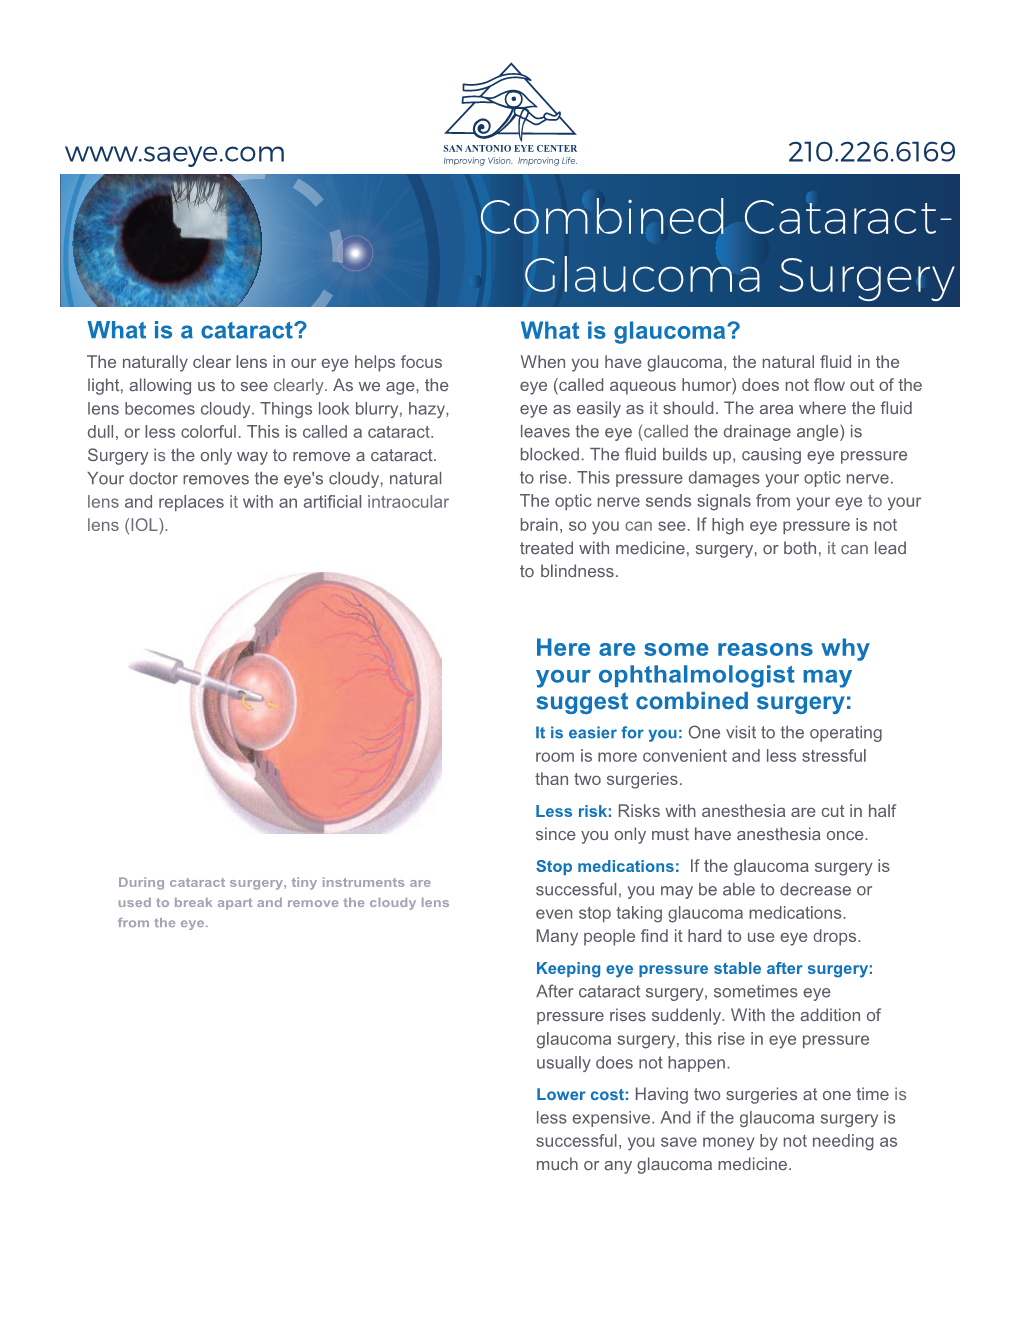 Combined Cataract-Glaucoma Surgery